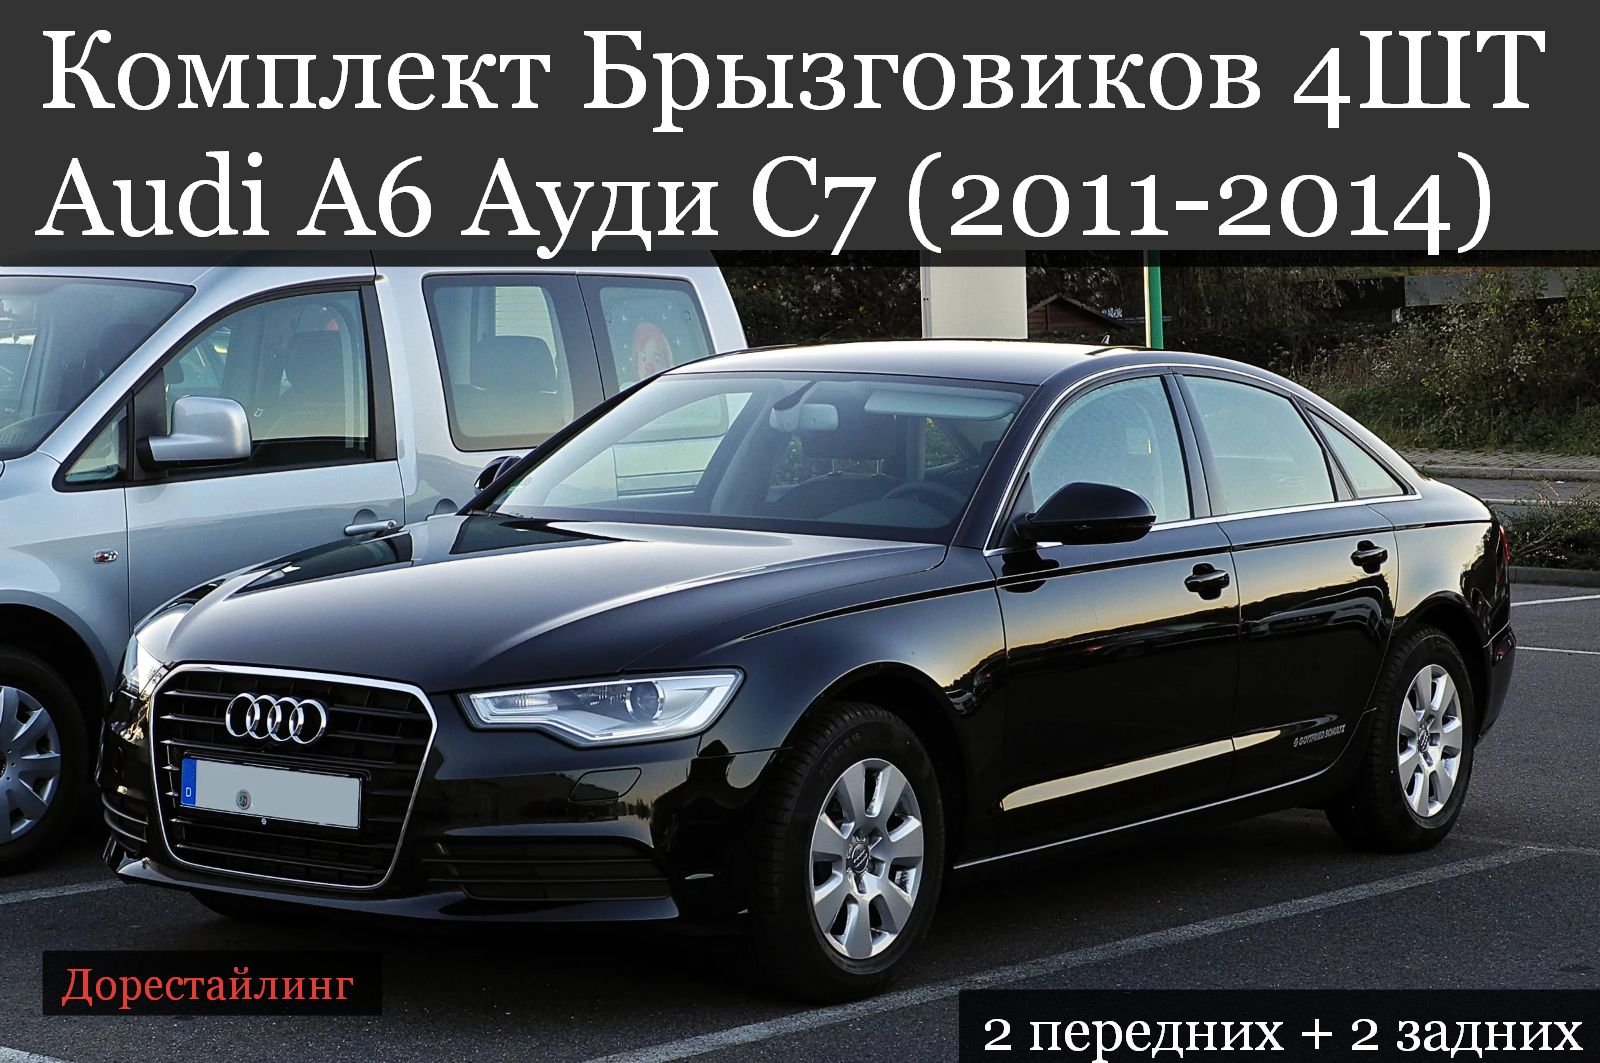 Авито купить ауди 7. Audi a6 2011. Ауди а6 2011. Audi a6 c7. Audi a6 c6 2011.